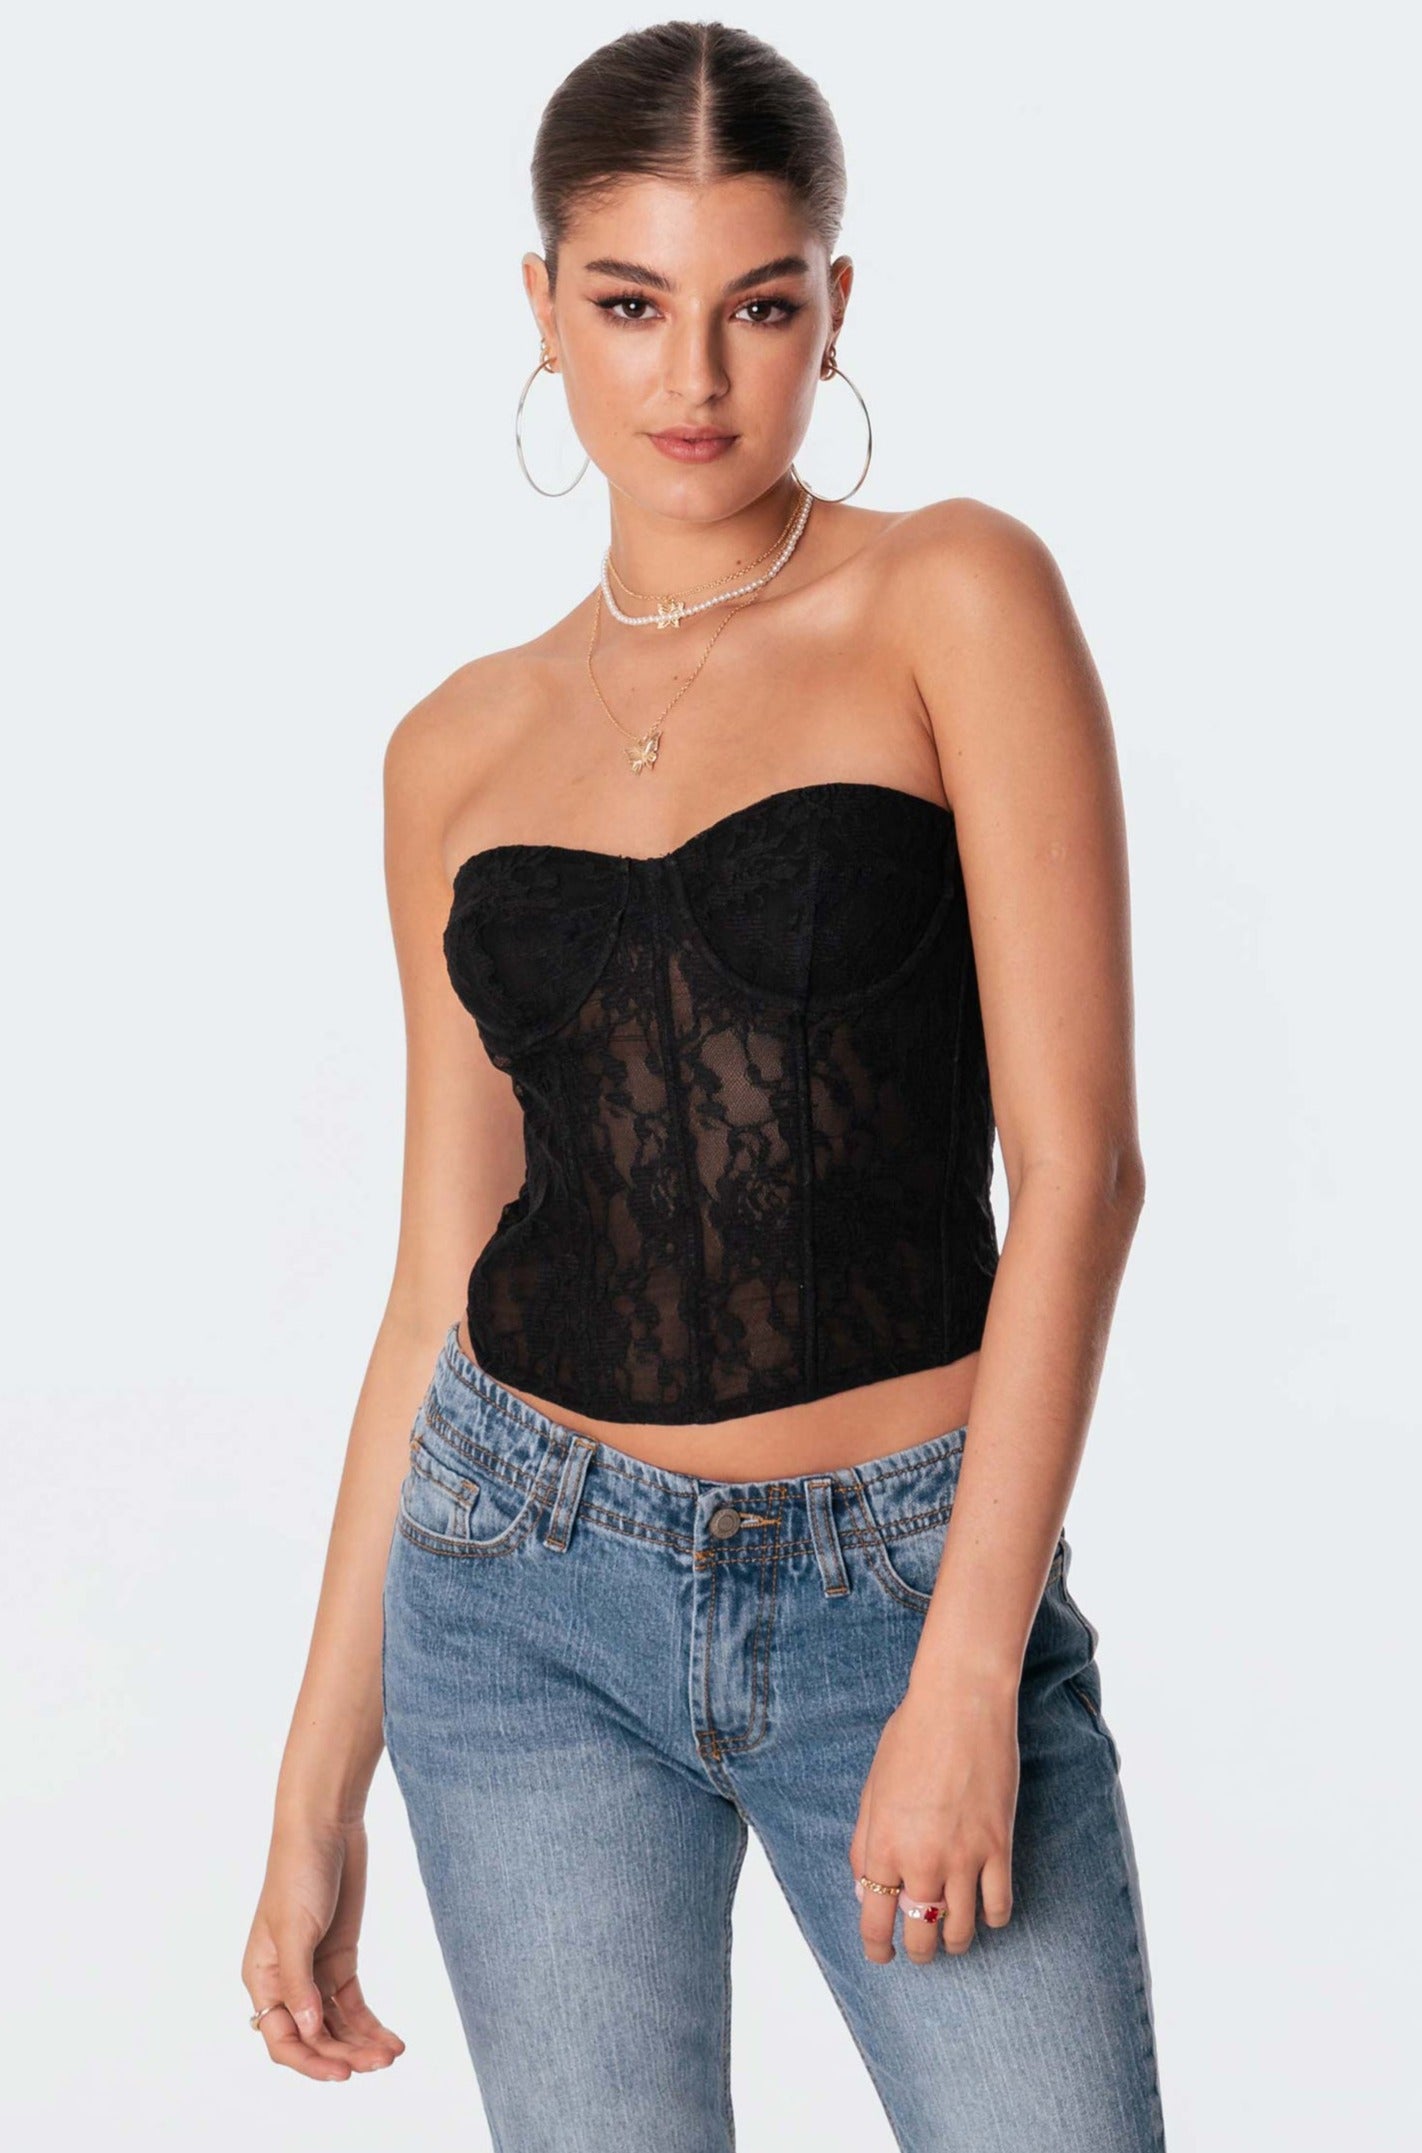 Decadent Designs - Katya wearing the Black Lace Neck corset https